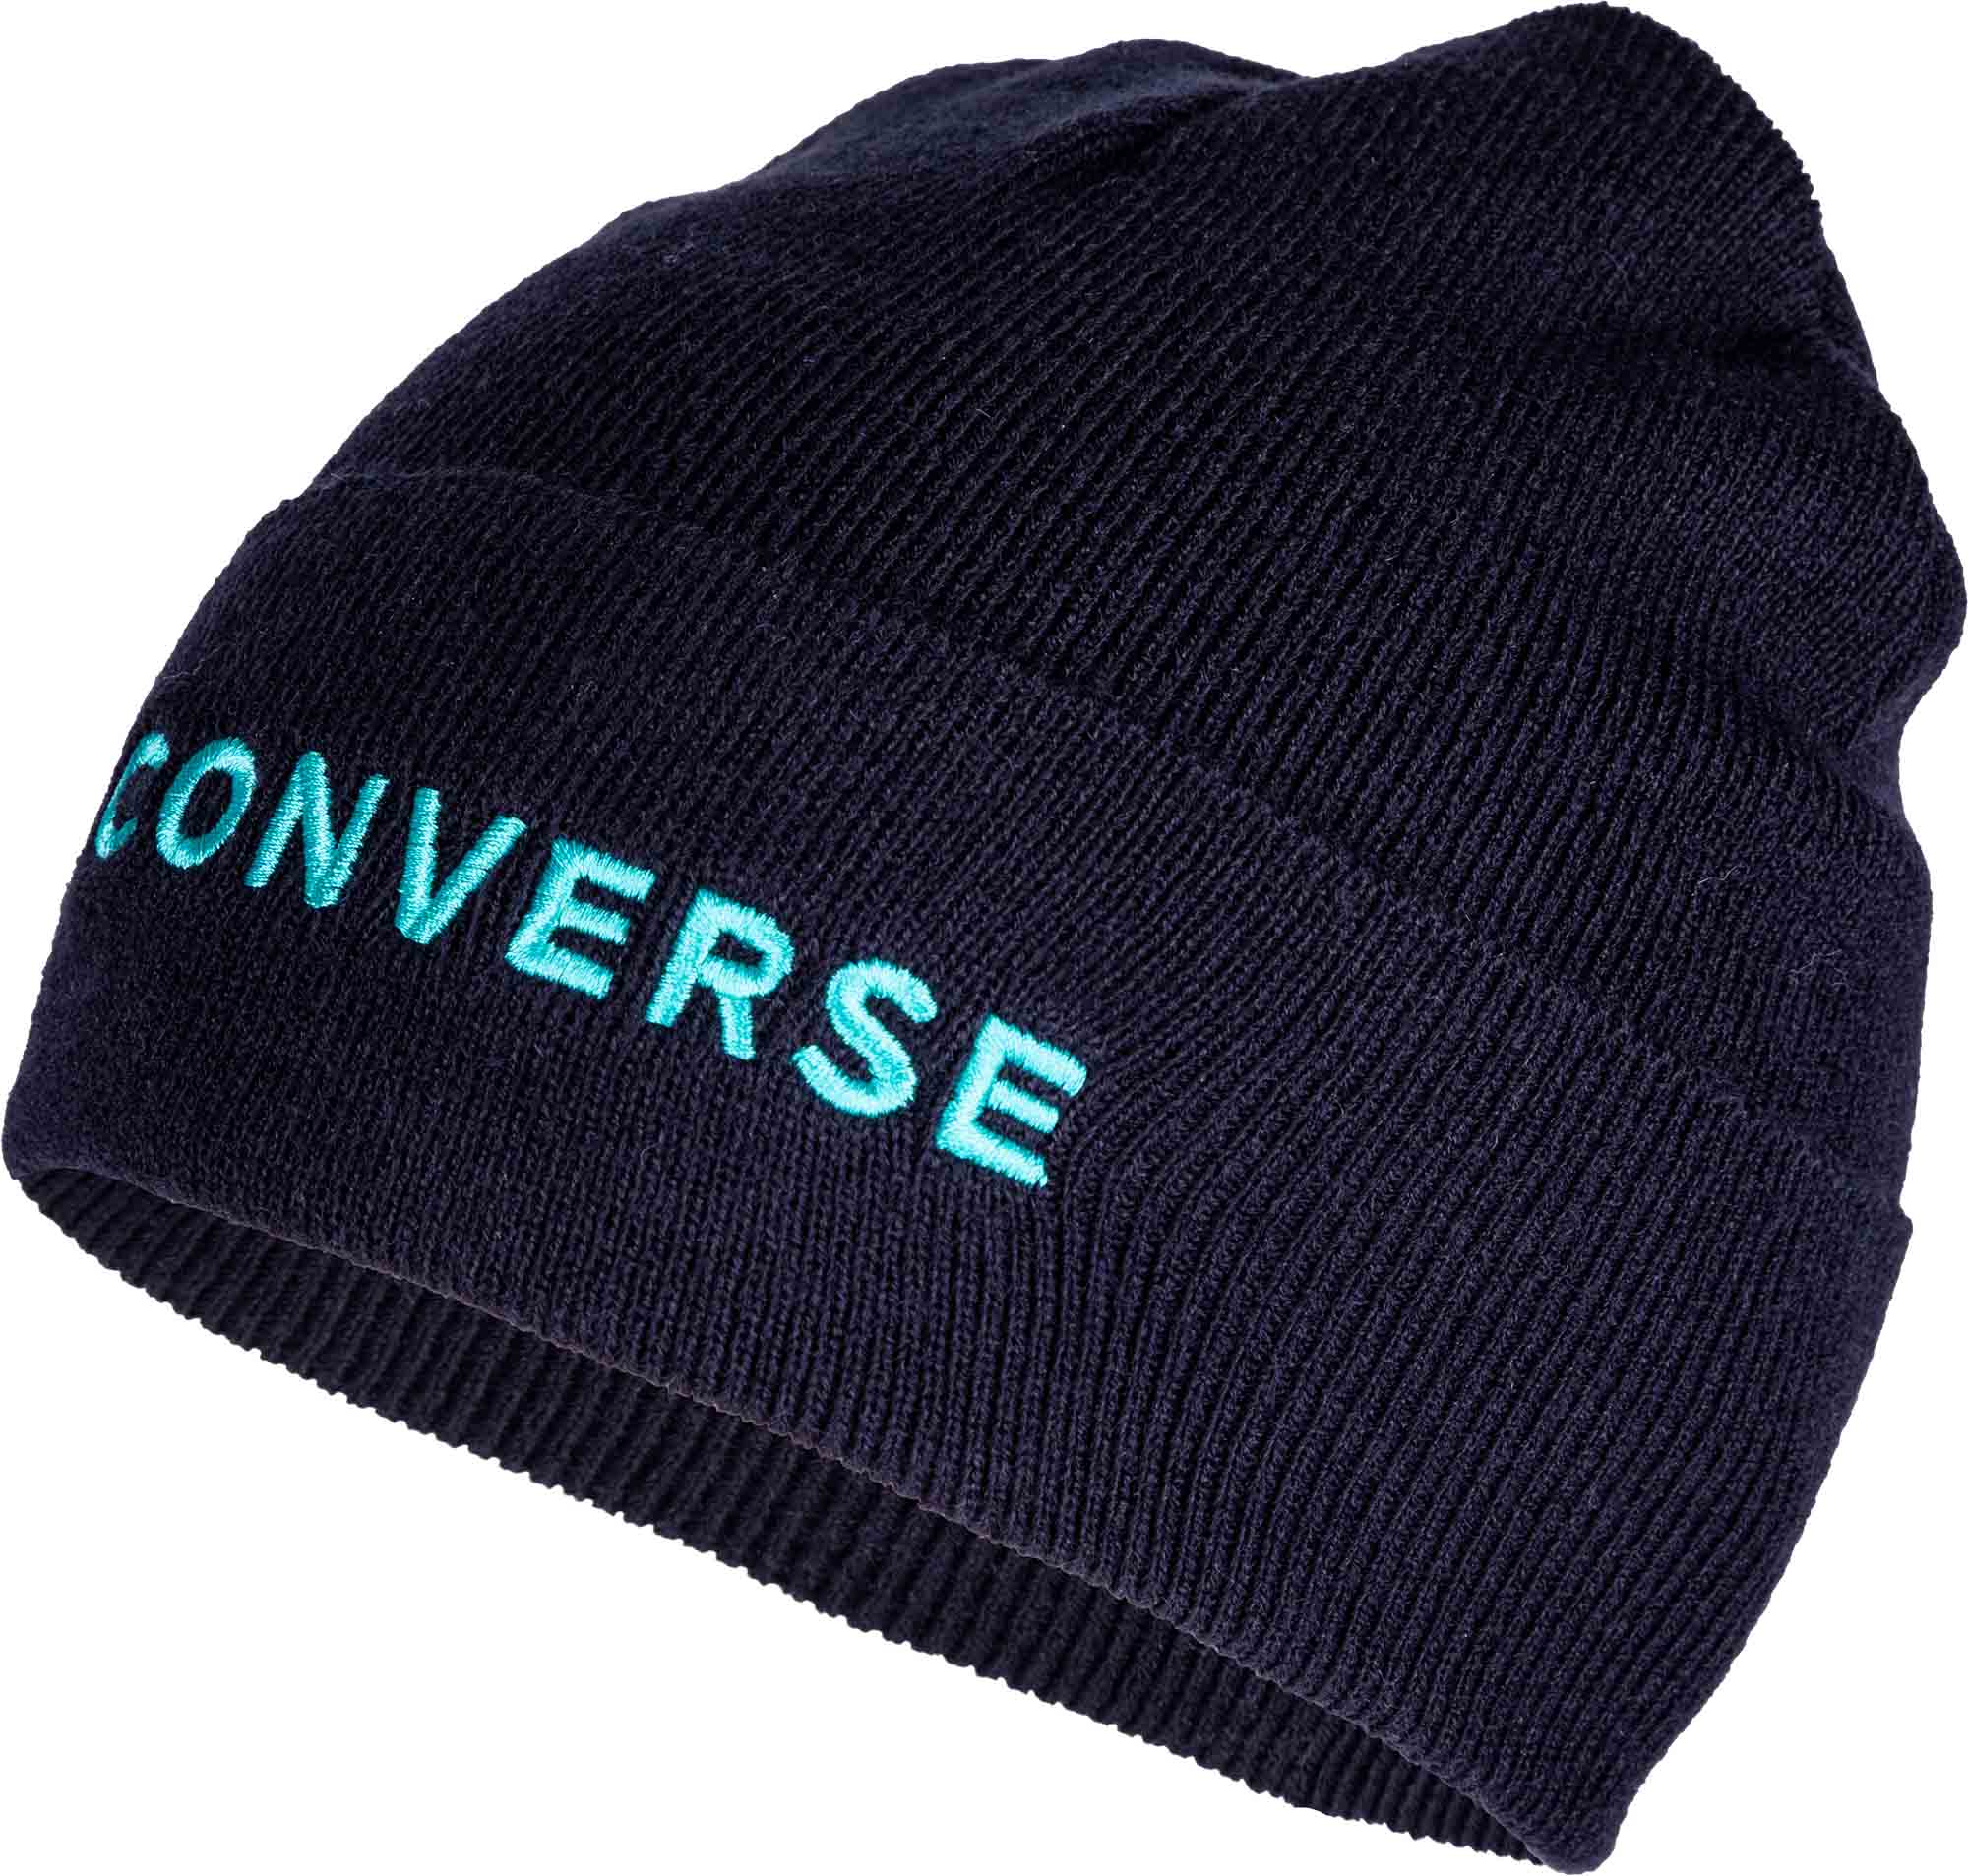 Unisex winter hat